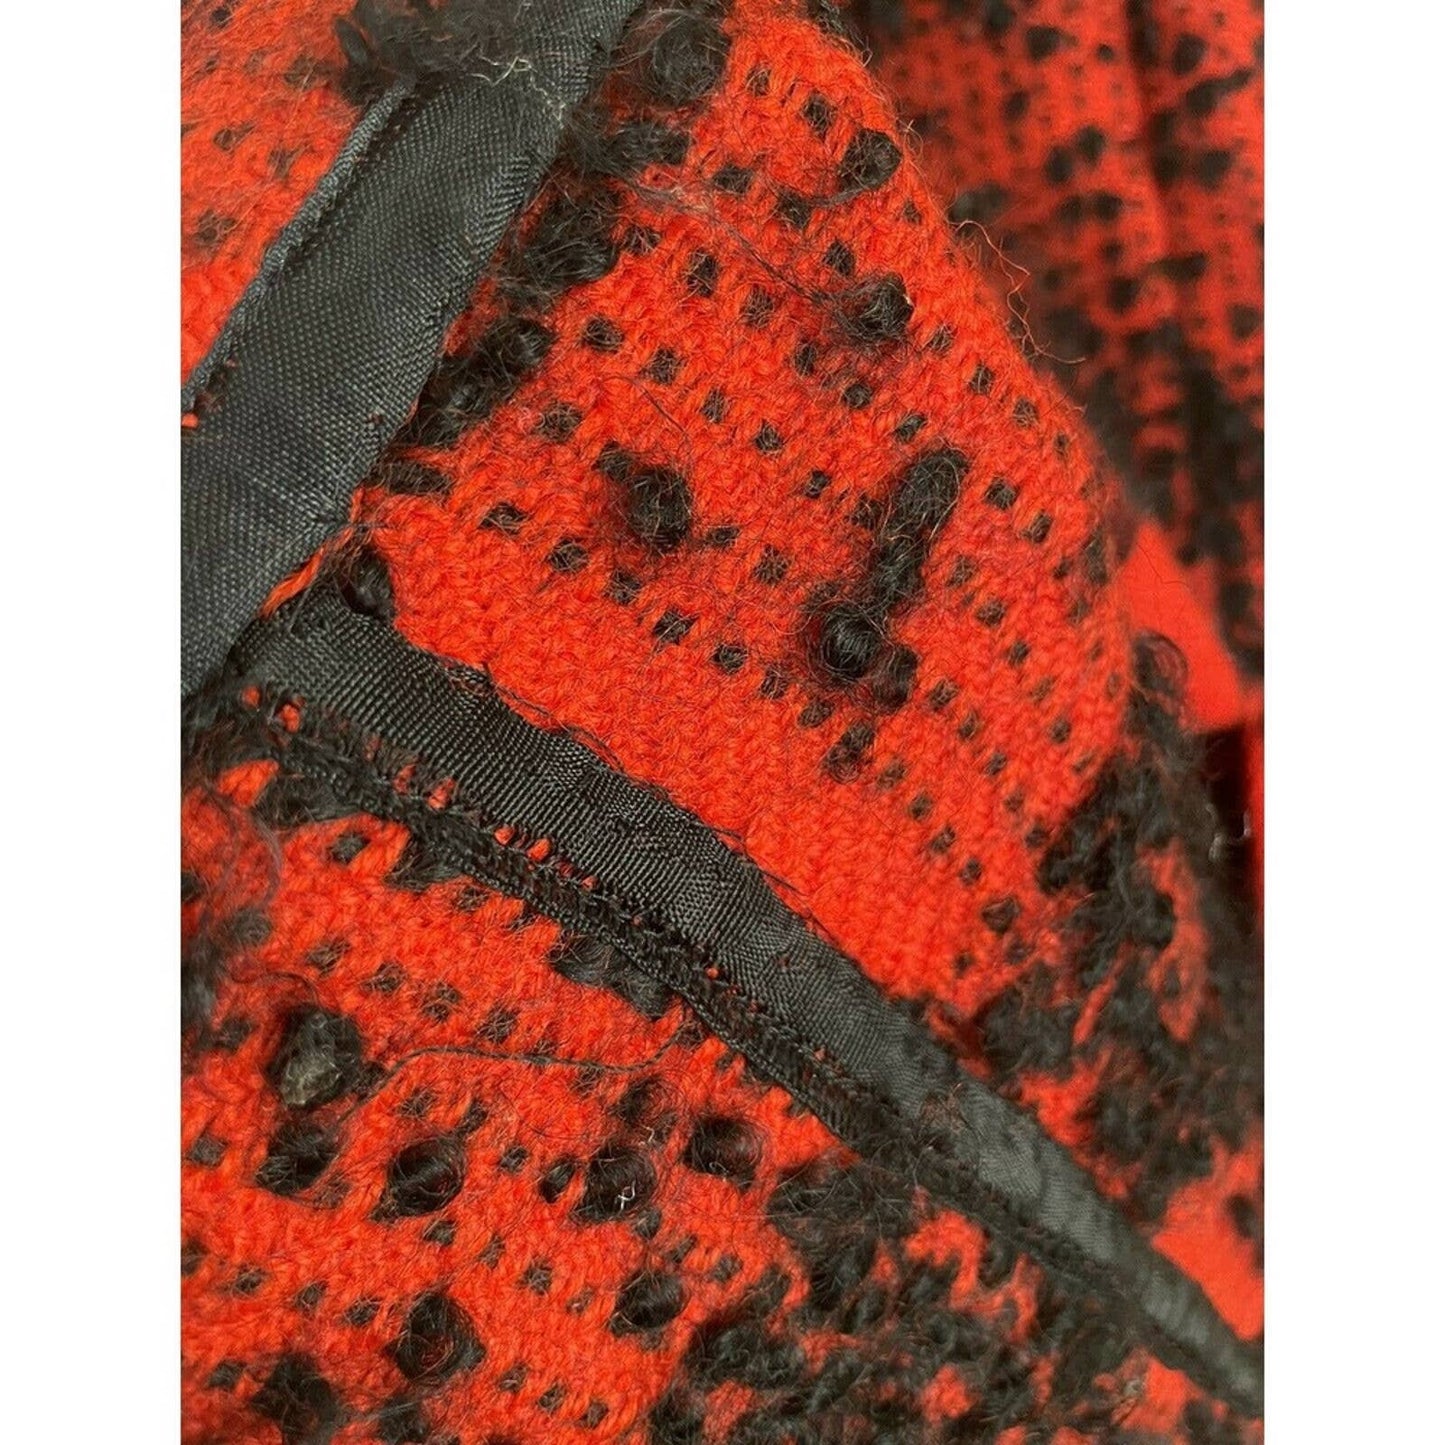 Vintage Handmade 1960s Wool Skirt Red Black Buffalo Check Textured Maxi Pencil